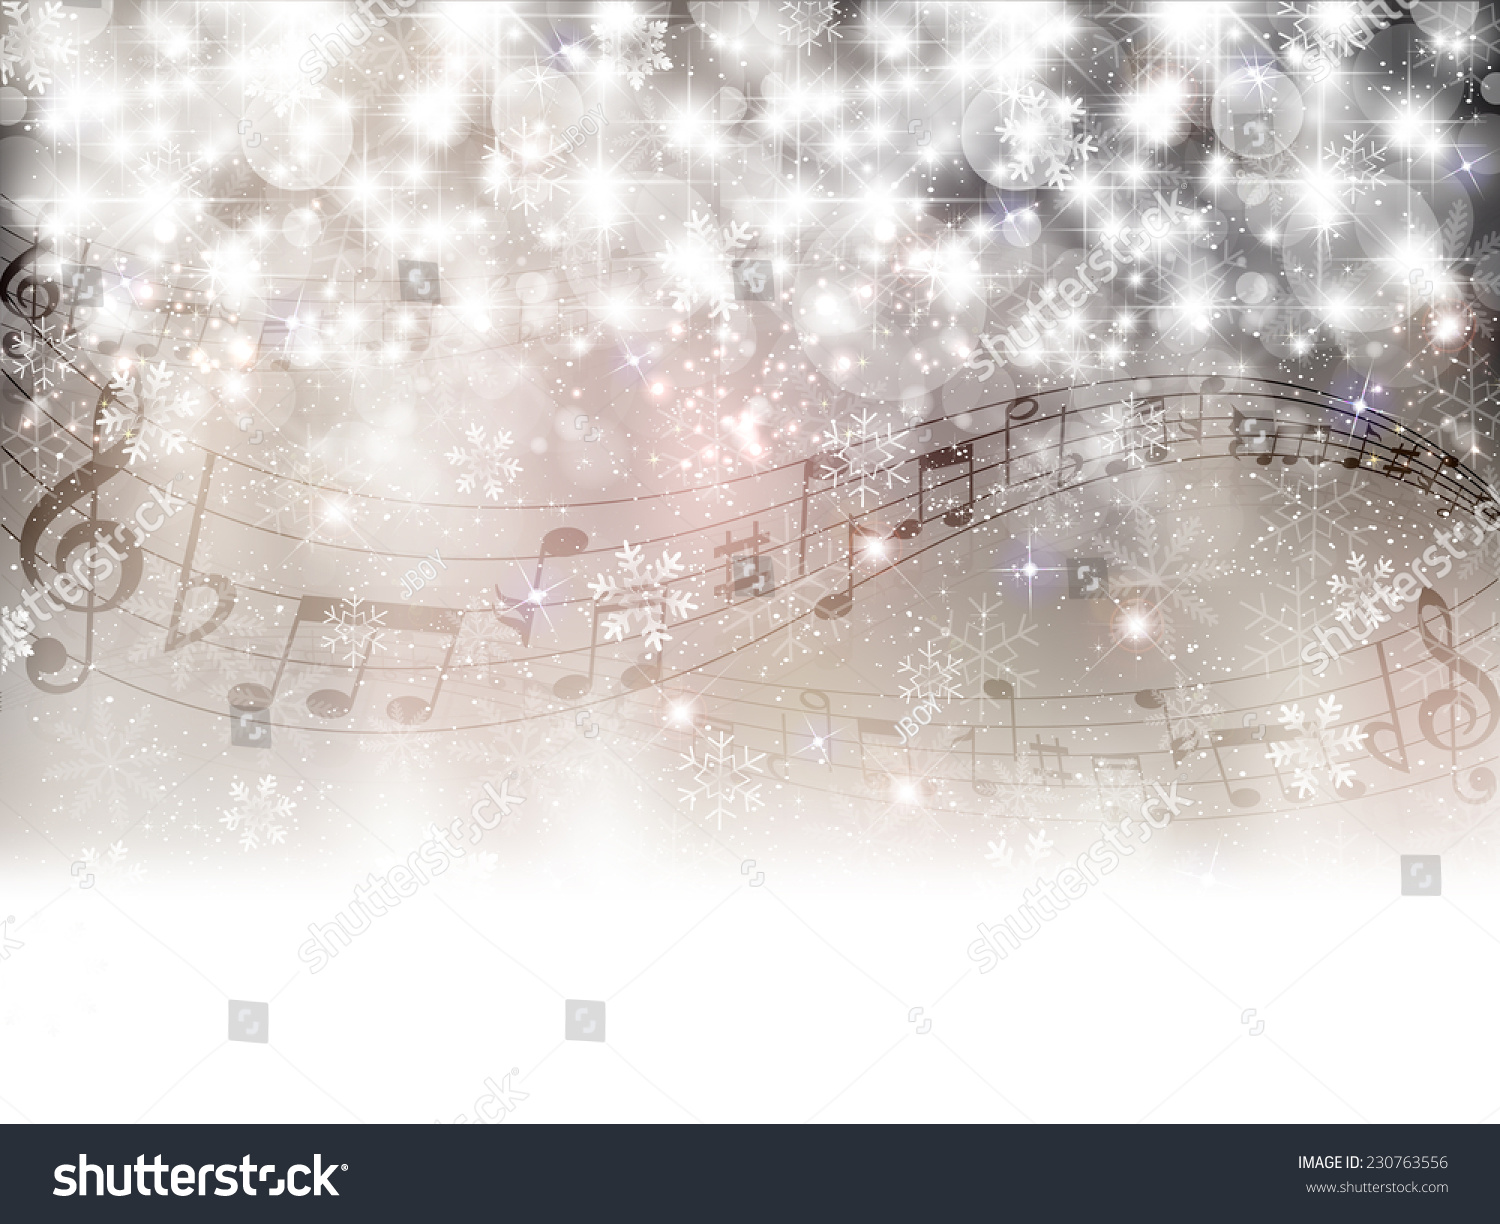 Music Snow Background Stock Illustration 230763556 - Shutterstock